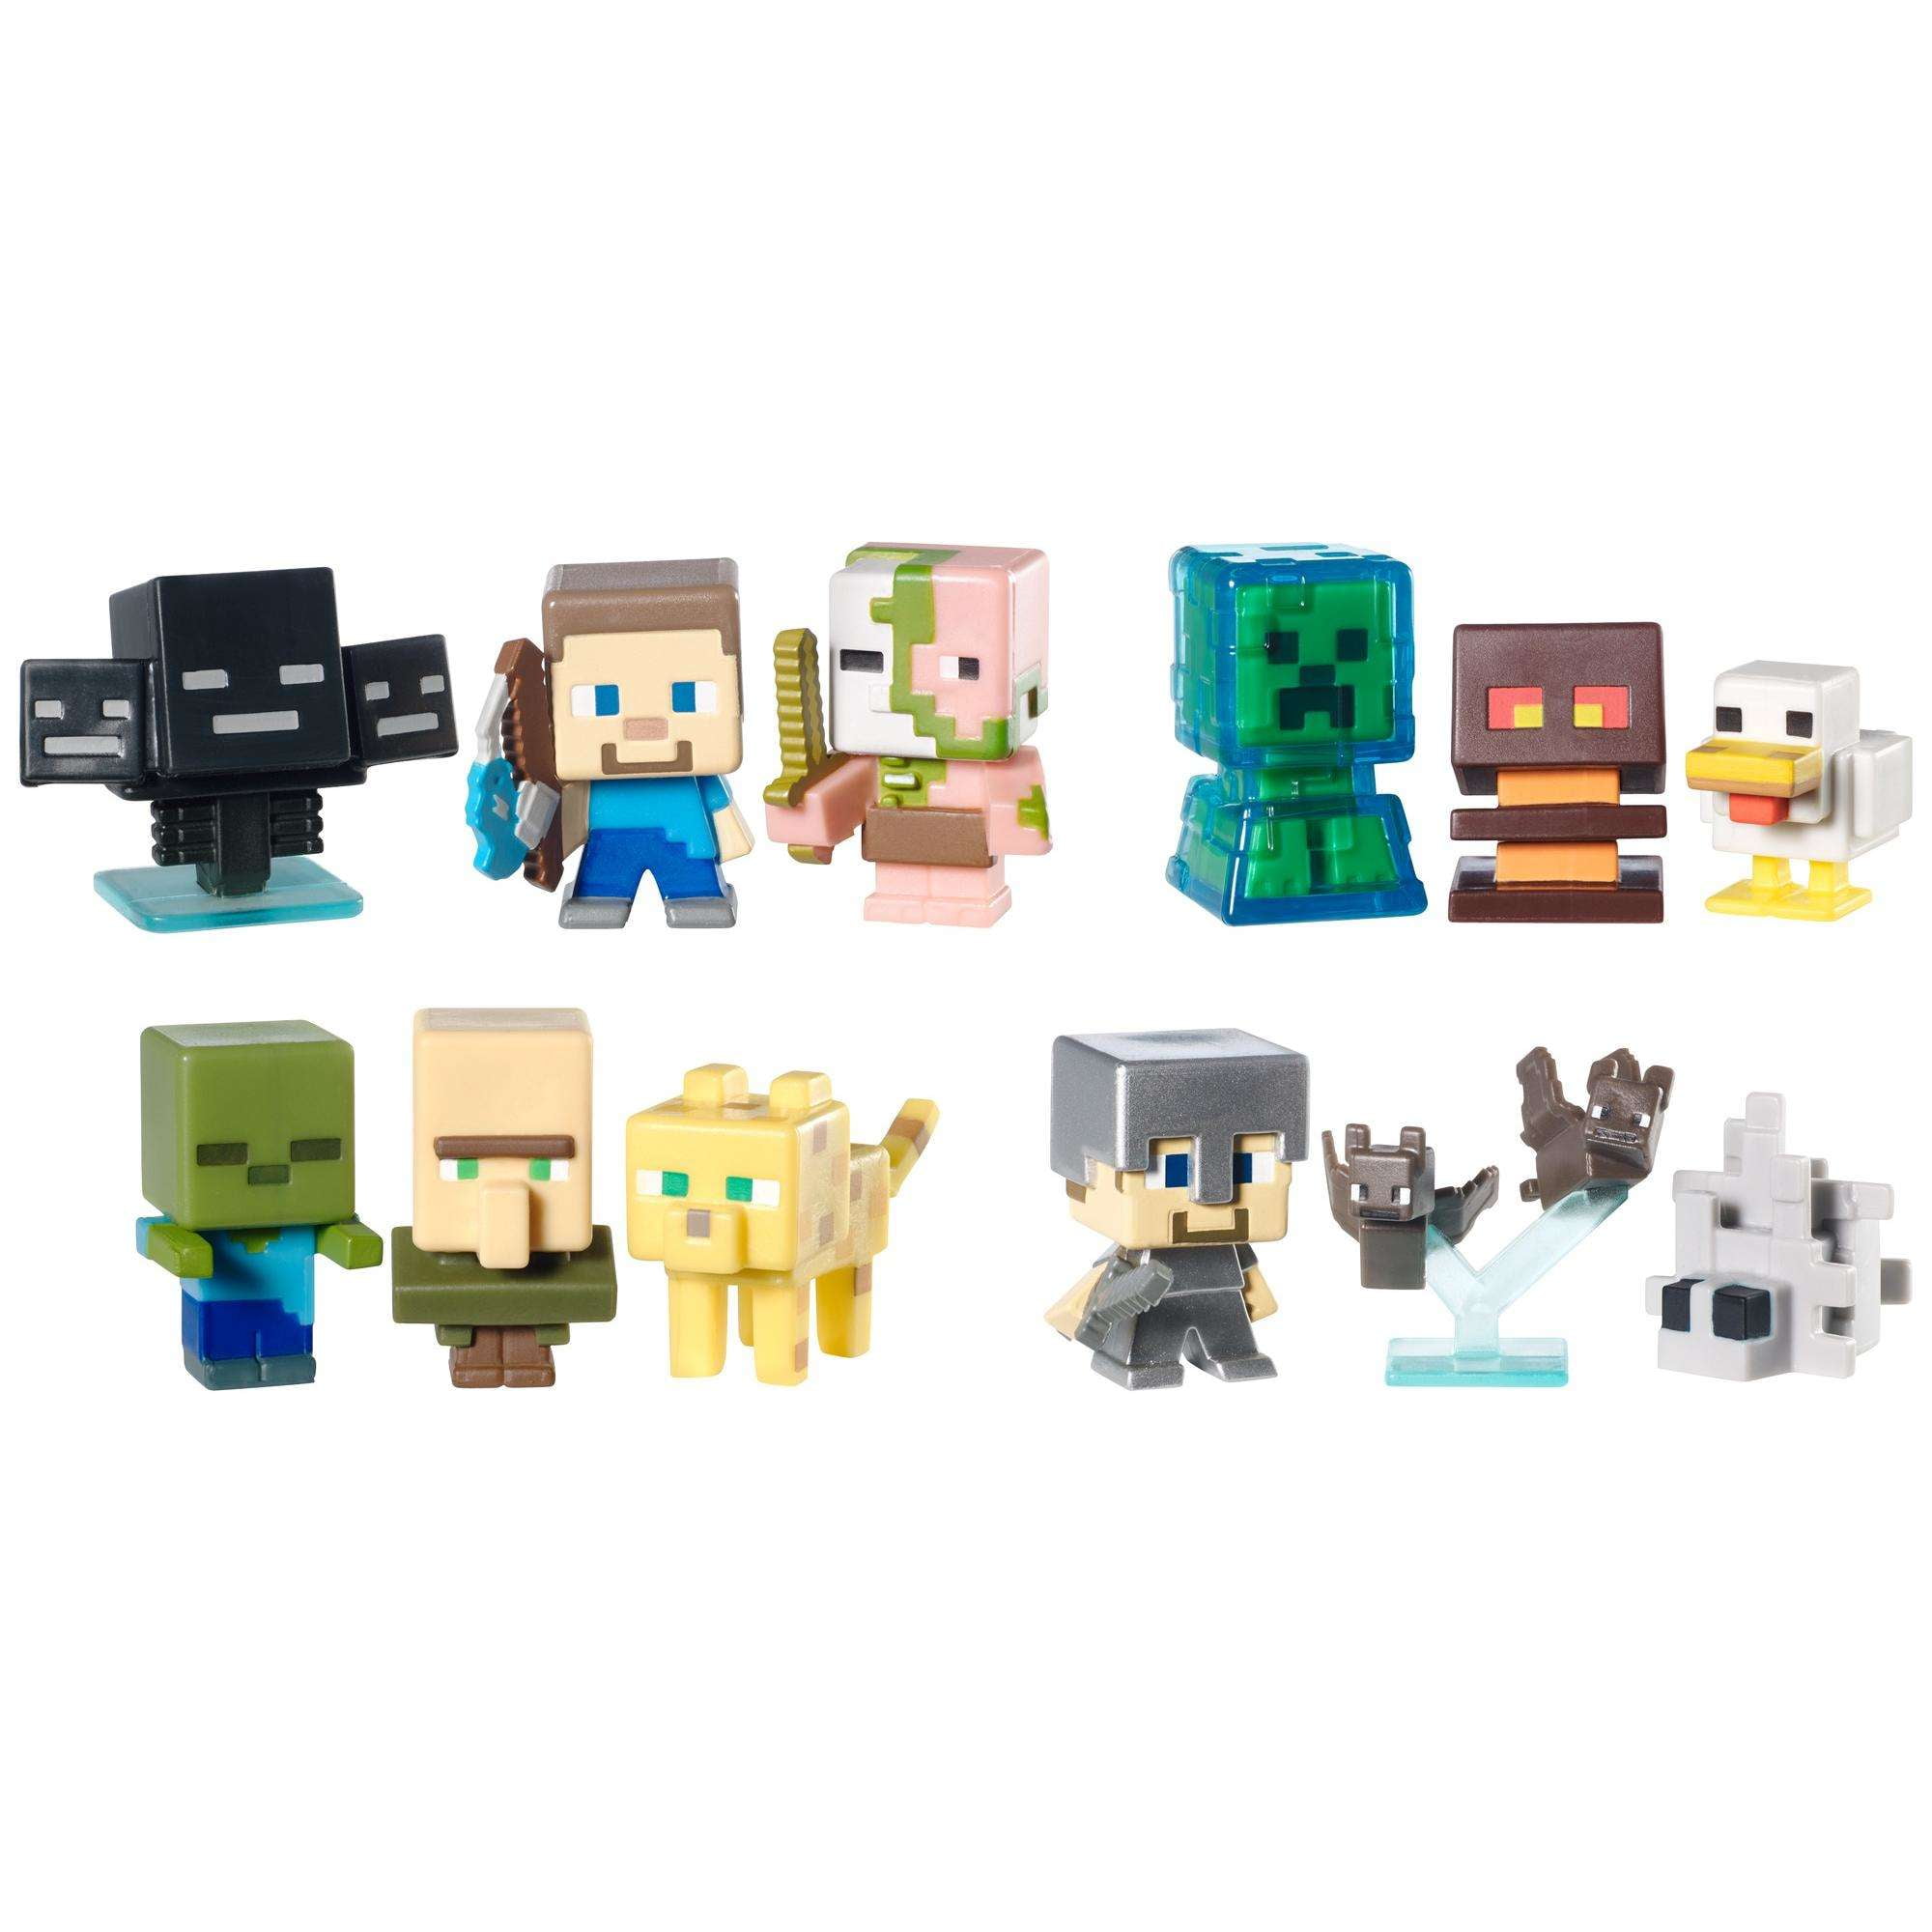  Minecraft  Mini Figure  3 Pack Assortment Walmart com 